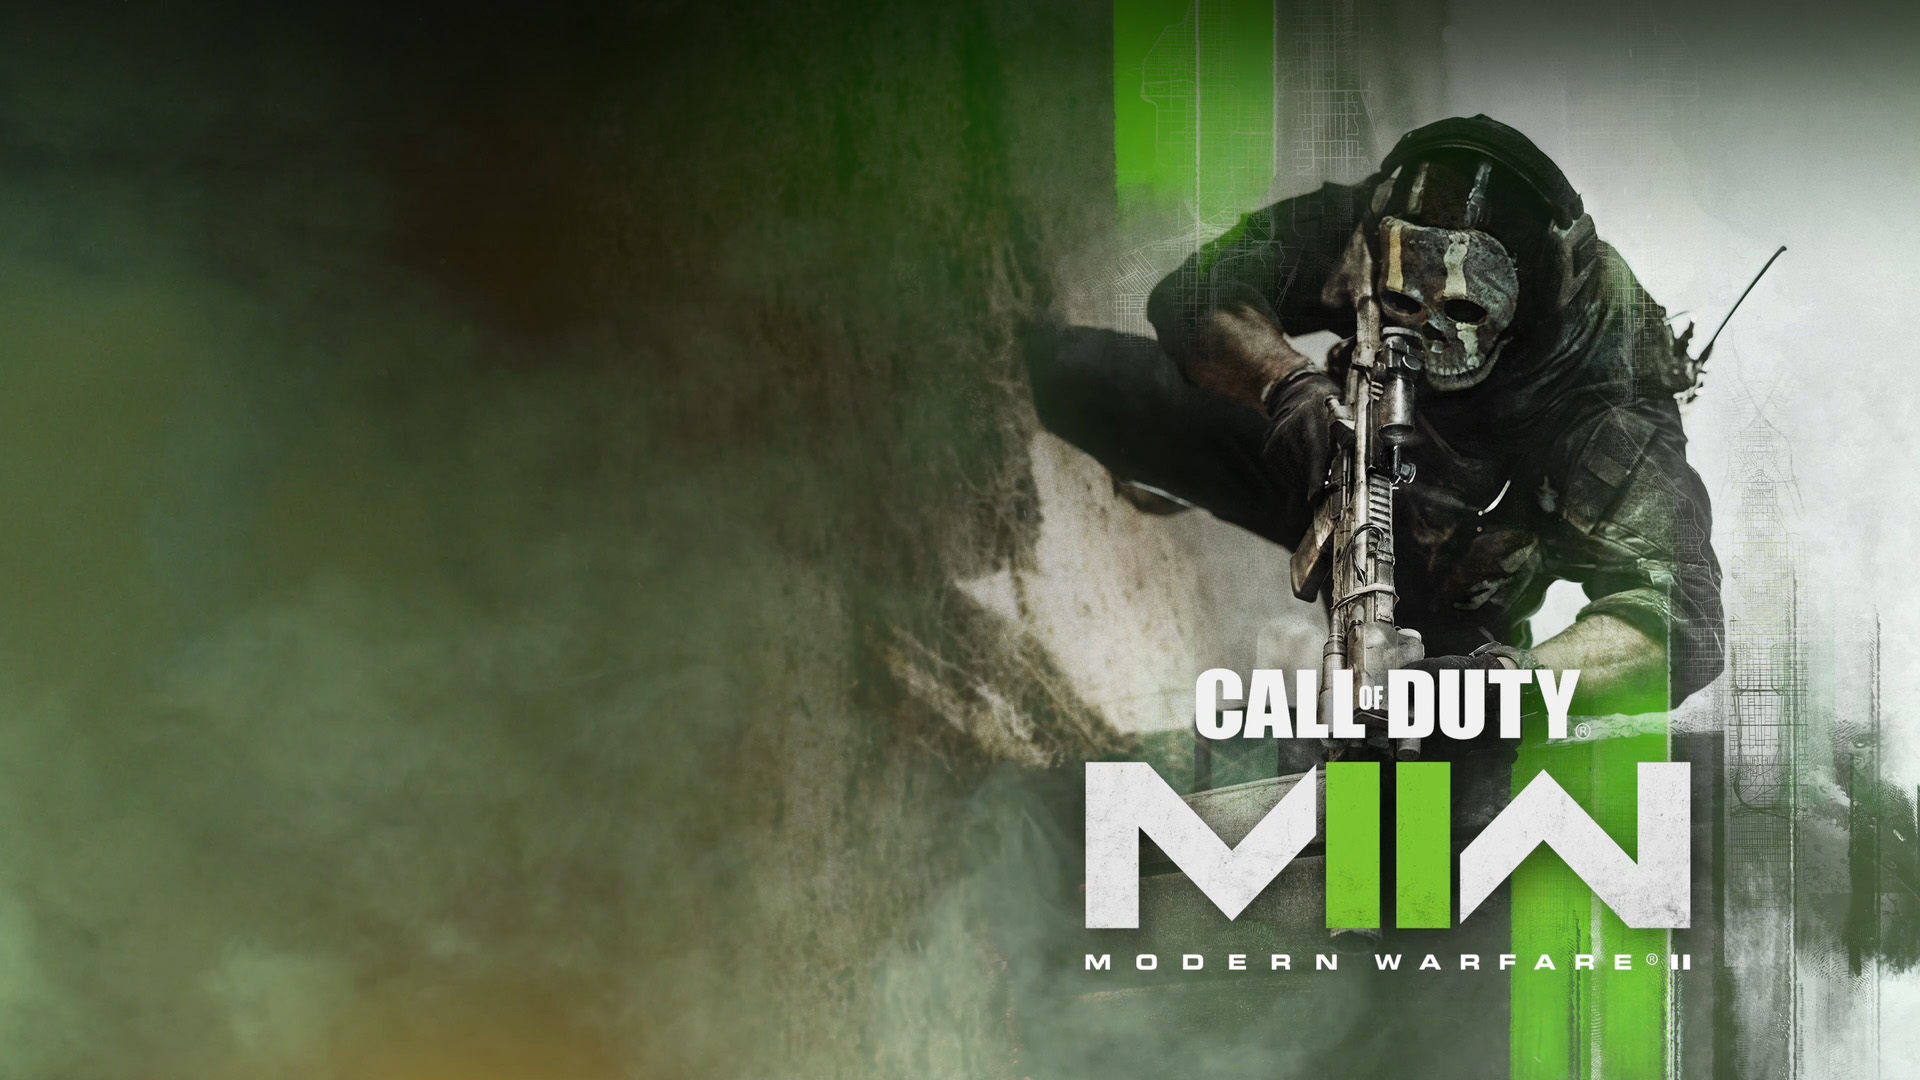 『Call of Duty: Modern Warfare II』で、しゃがみこんで準備するオペレーター。